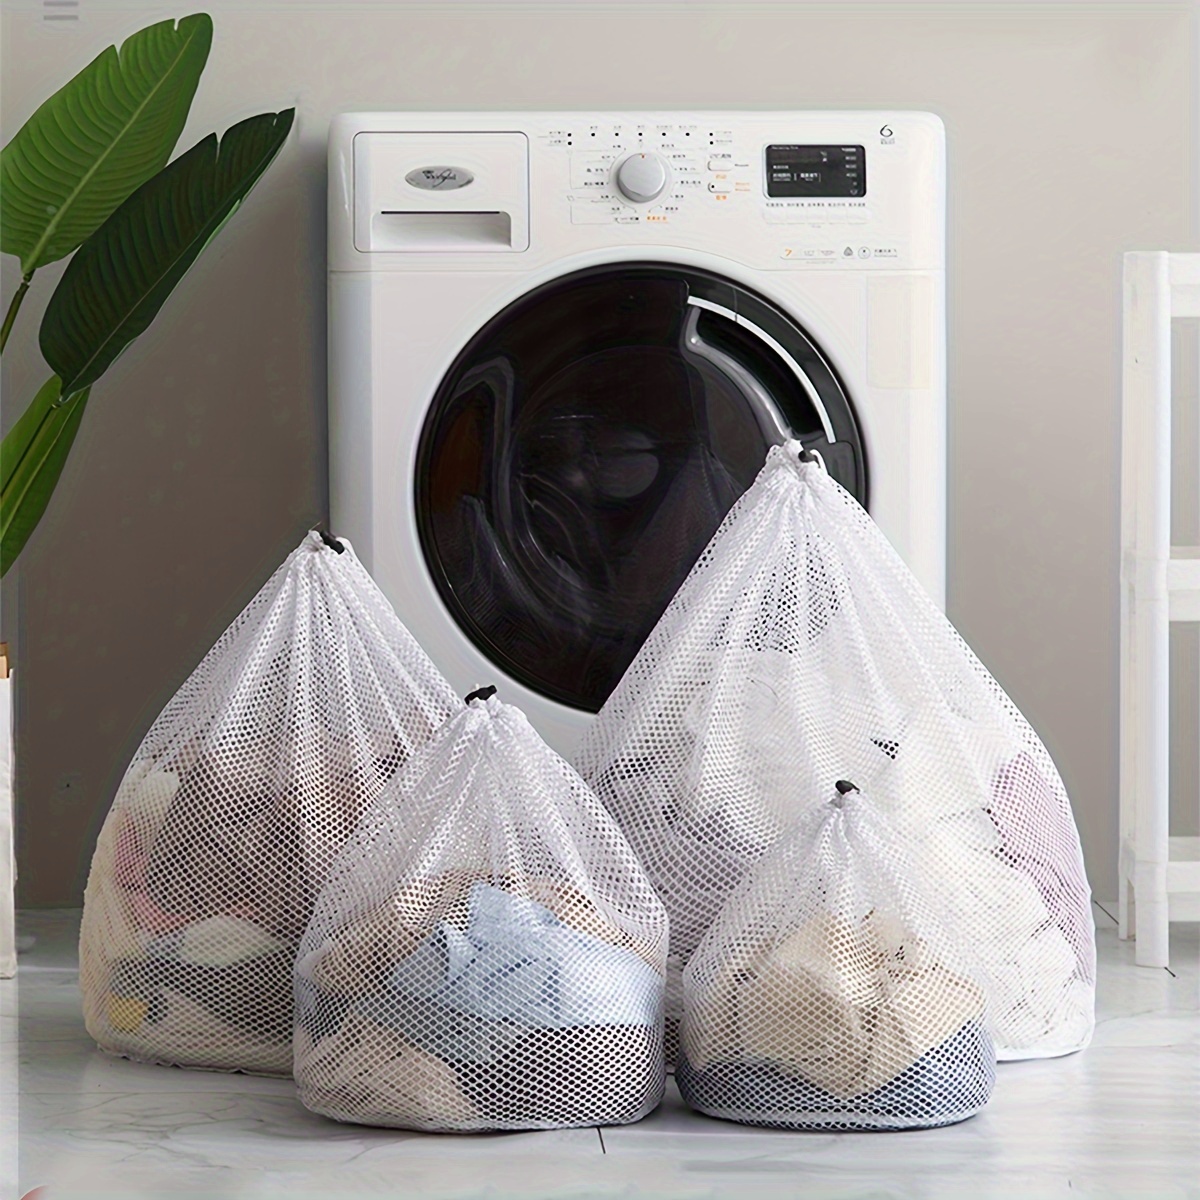 Bra Laundry Net Laundry Bag Bra Washing Kit Bra Protector Washing Bag for  Washing Machines and Dryers Bra Protector for bras and bikinis